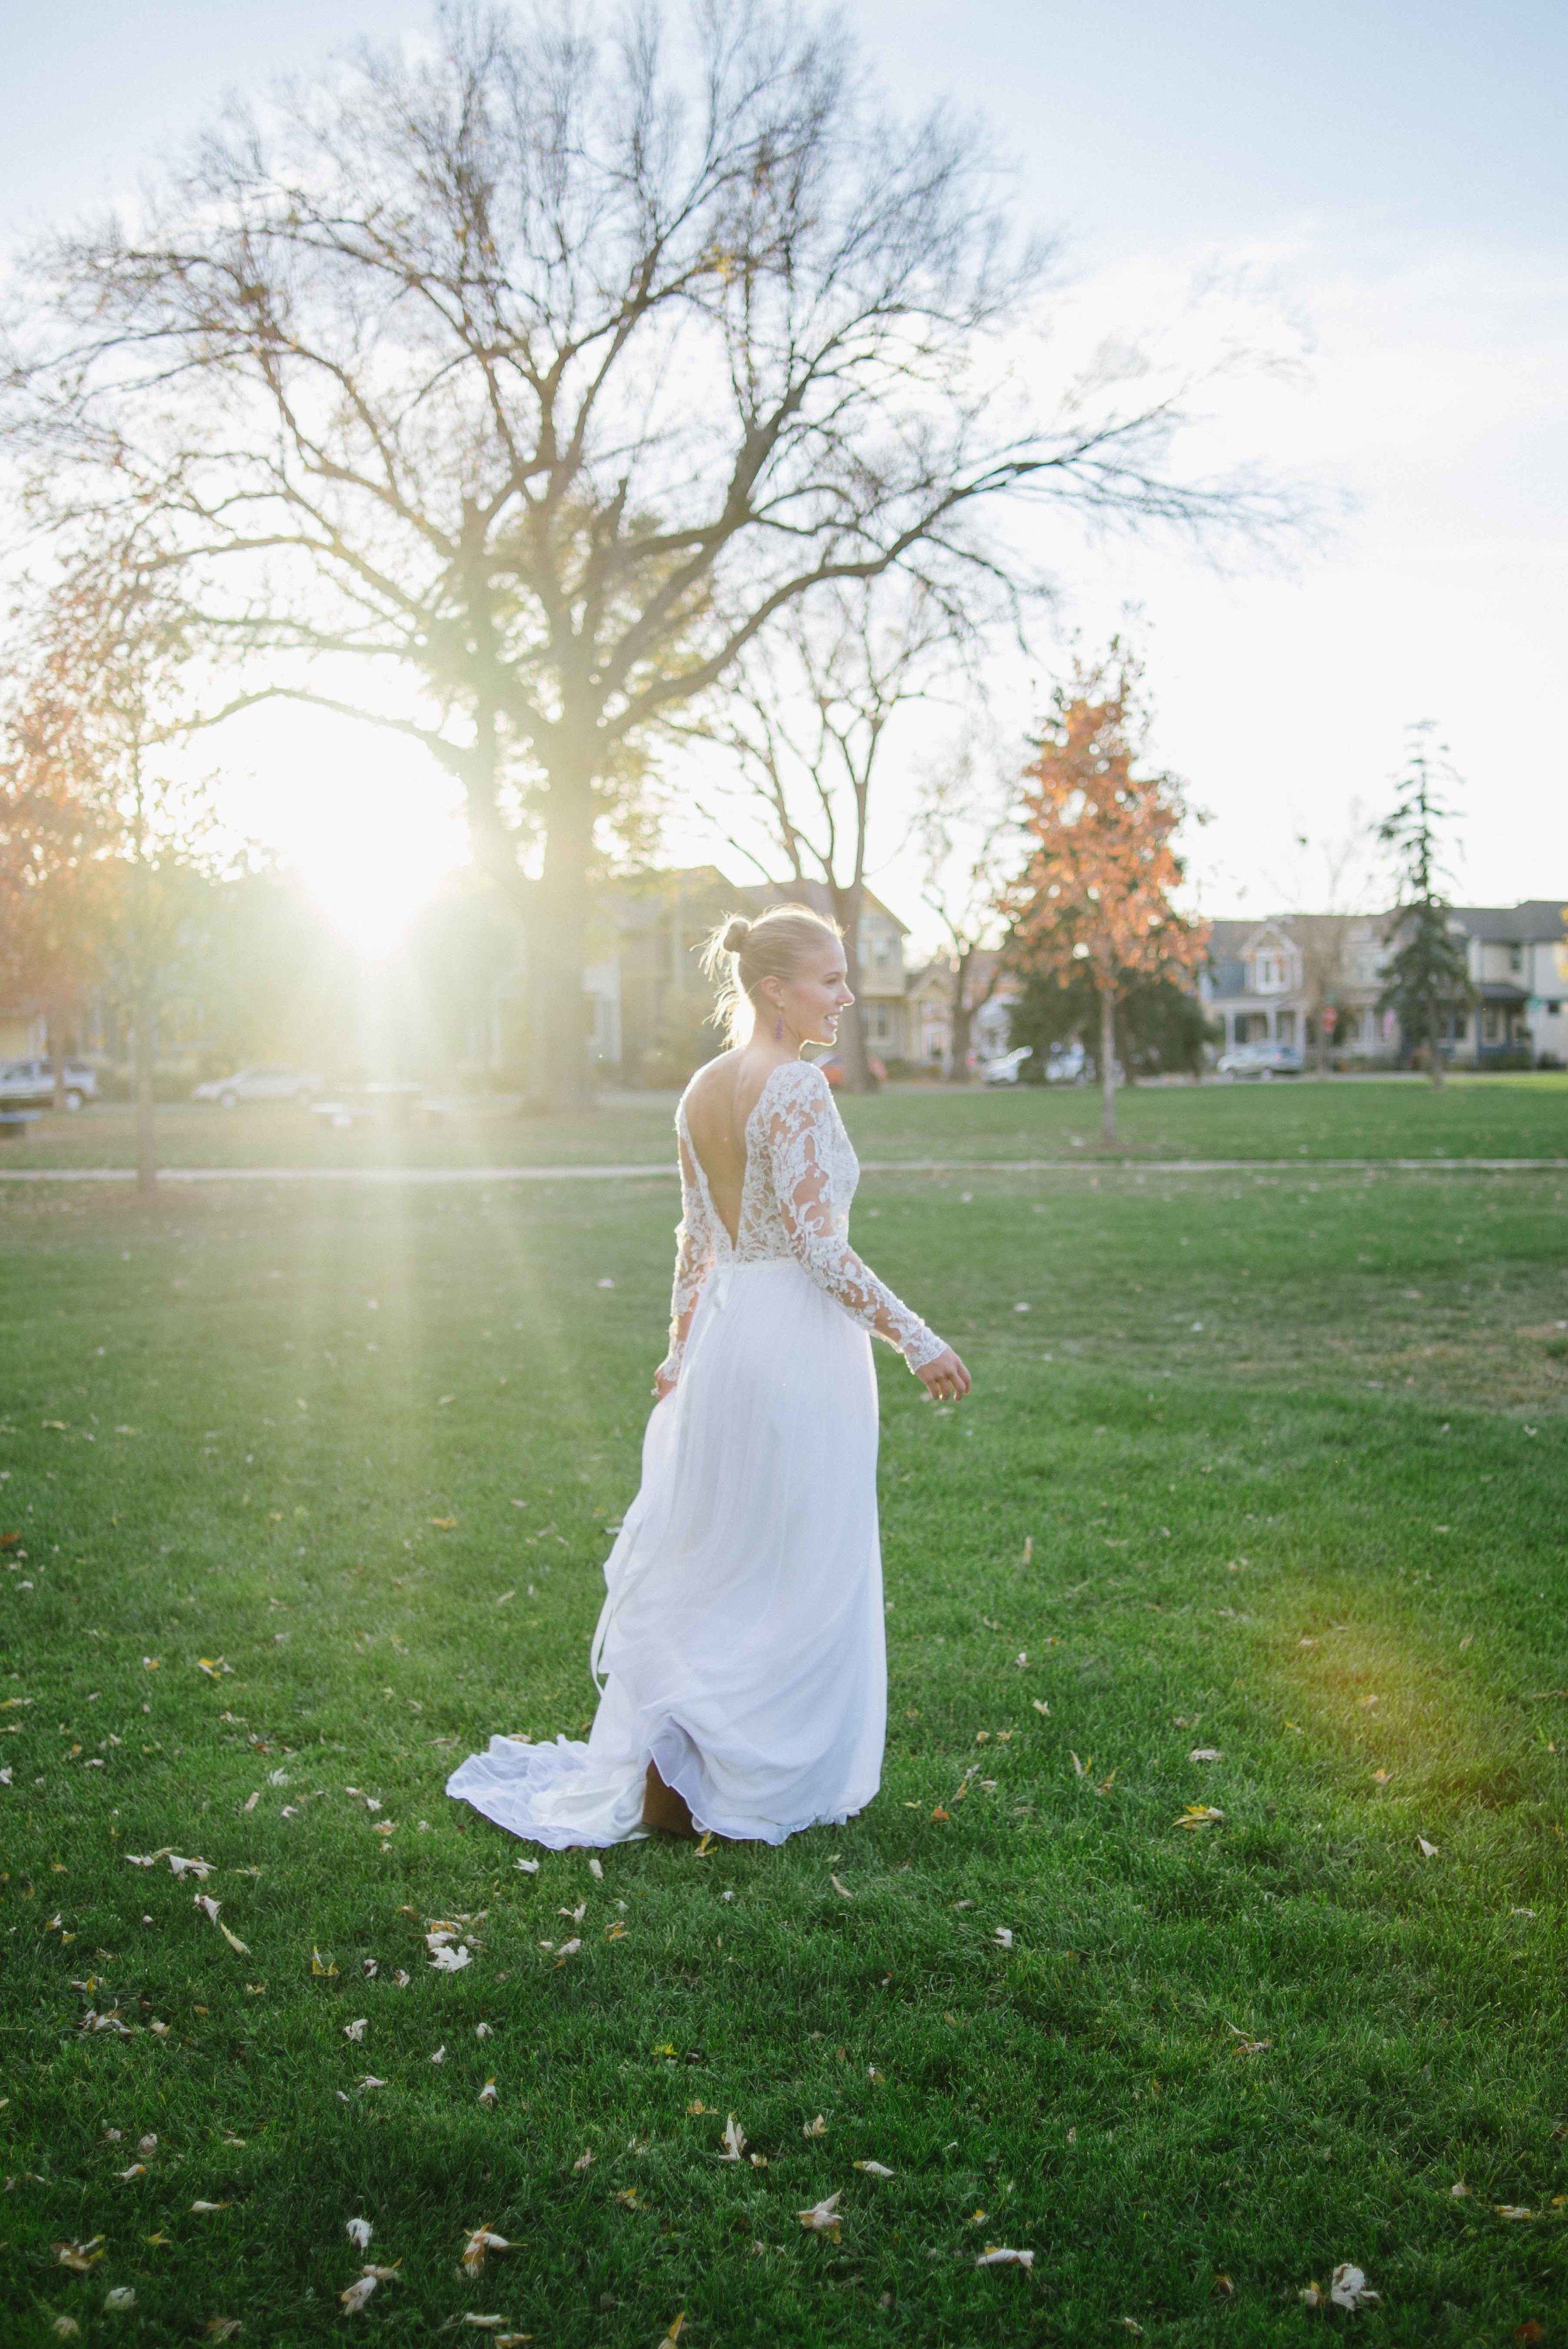  Fall Wedding Inspiration | Anne Barge "Leyland"&nbsp;| available at Little White Dress Bridal Shop in Denver | Photography: Kelly Leggett 